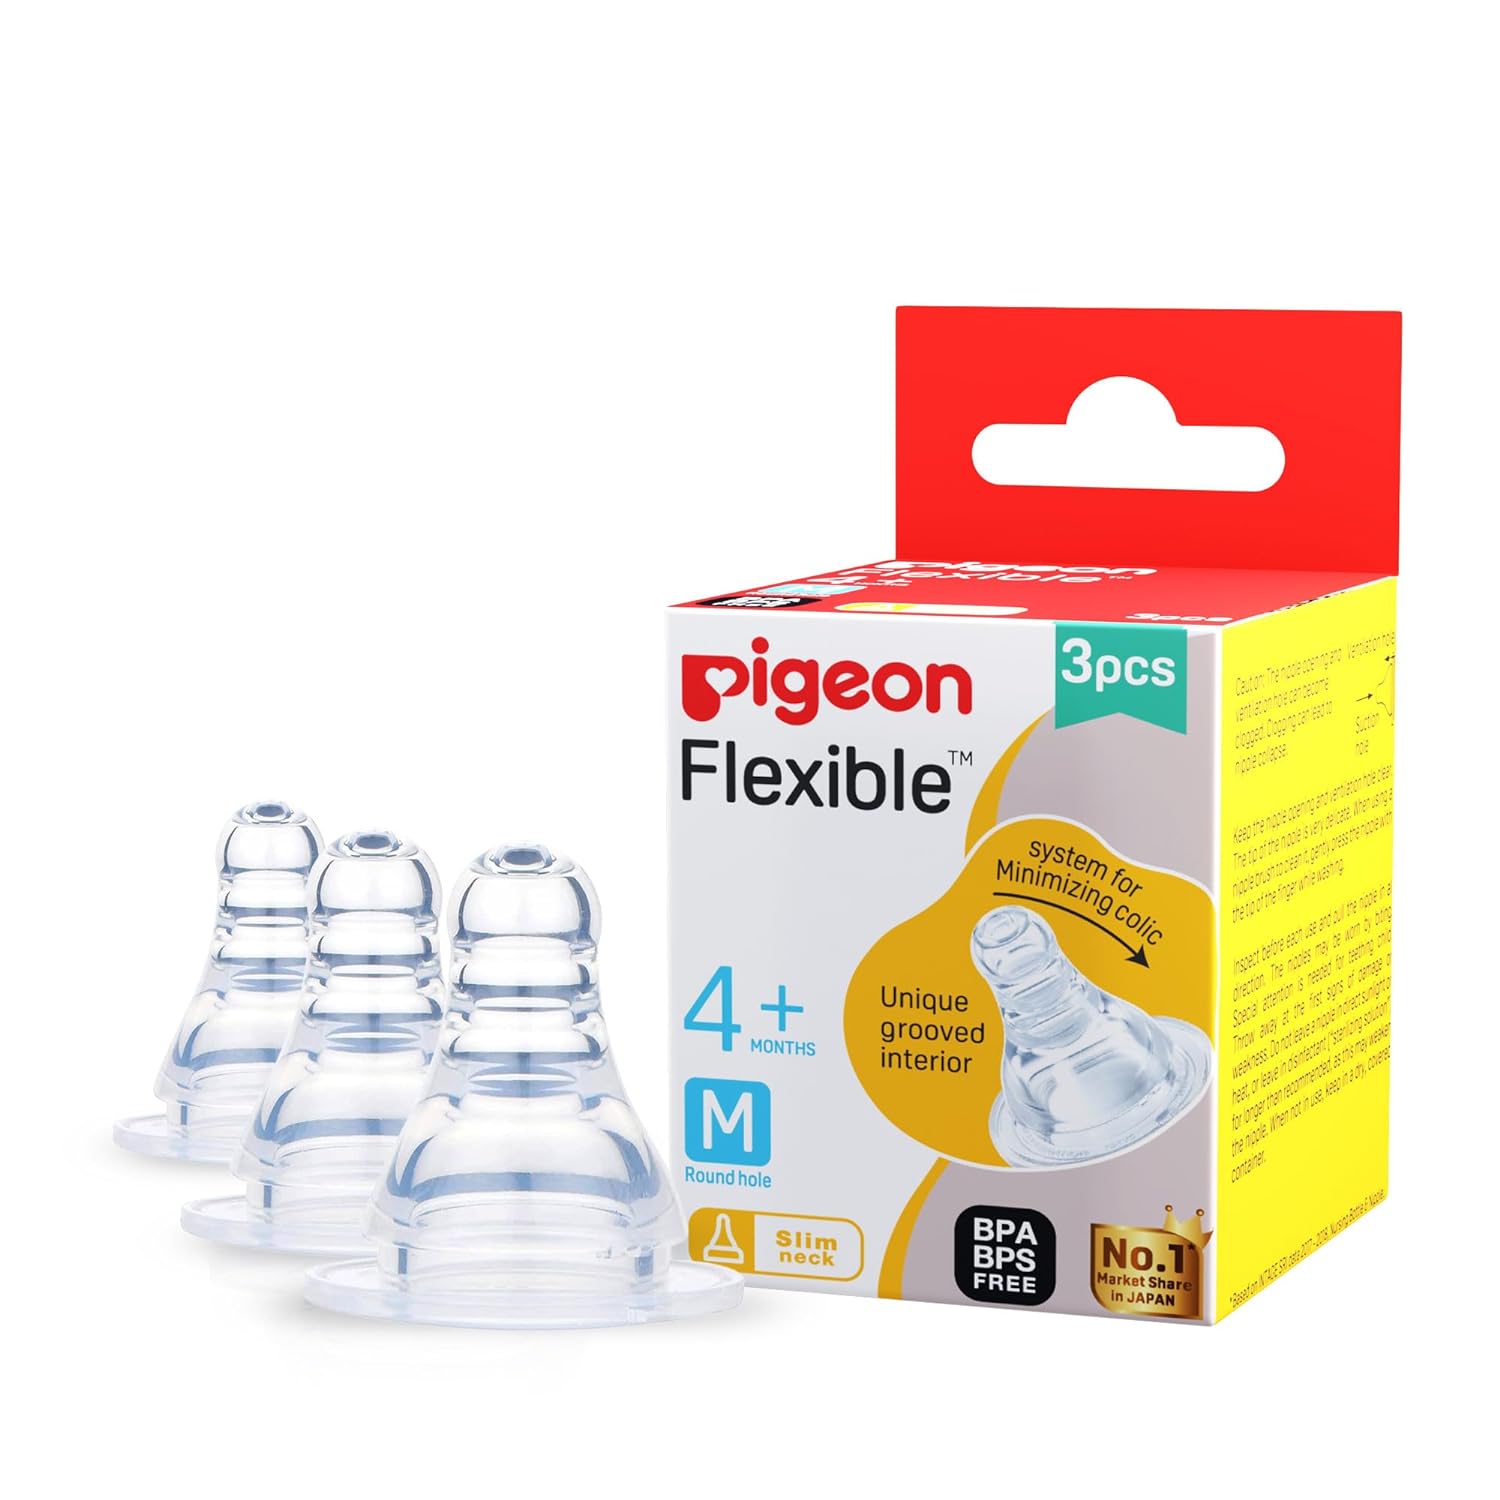 Buy Pigeon Flexible Baby Milk Feeding Bottle Teat Online in India at uyyaala.com